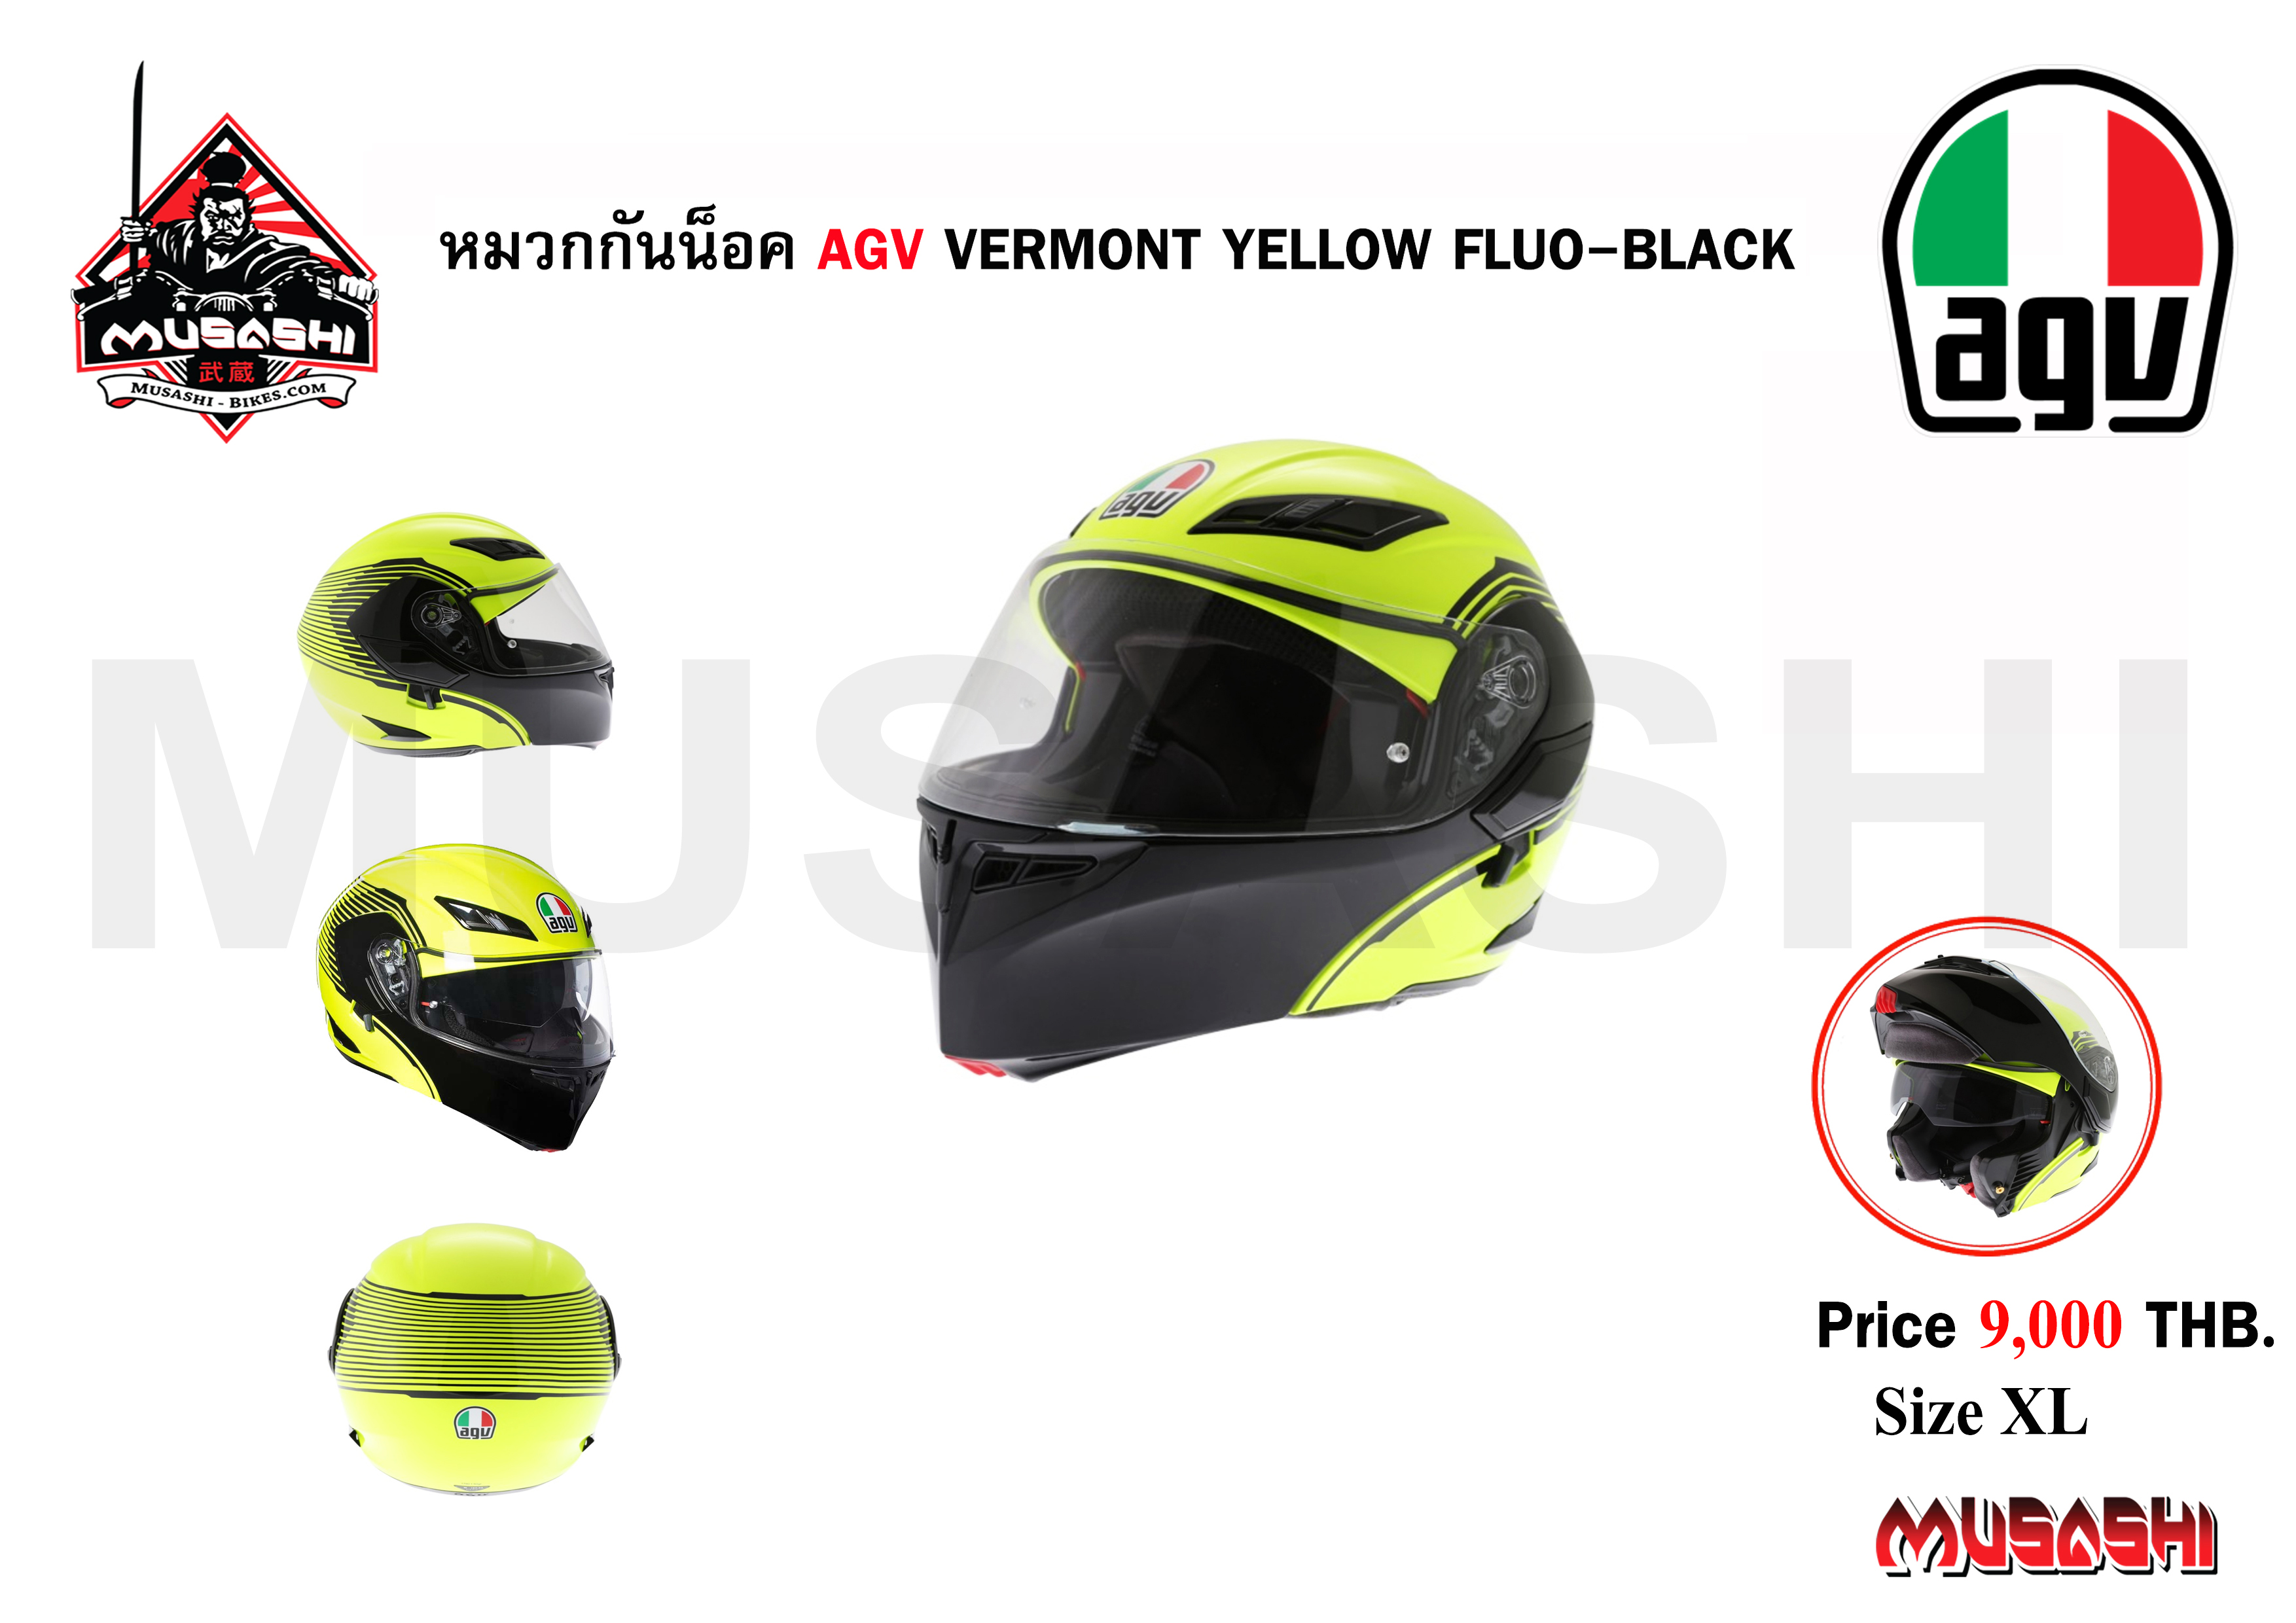 AGV Vermont Yellow Fluo-Black